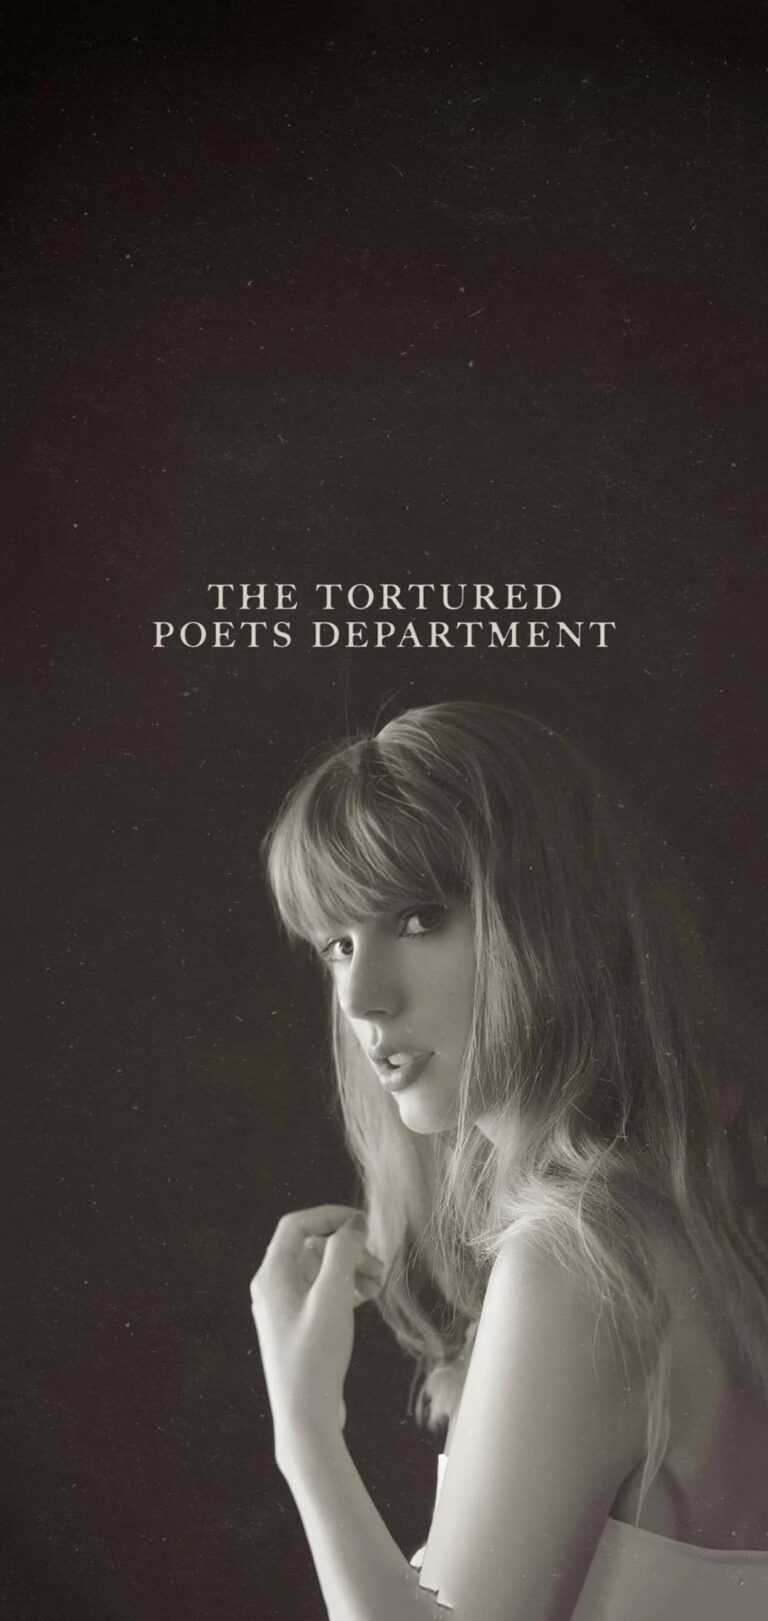 The Tortured Poets Department Wallpaper - iXpap